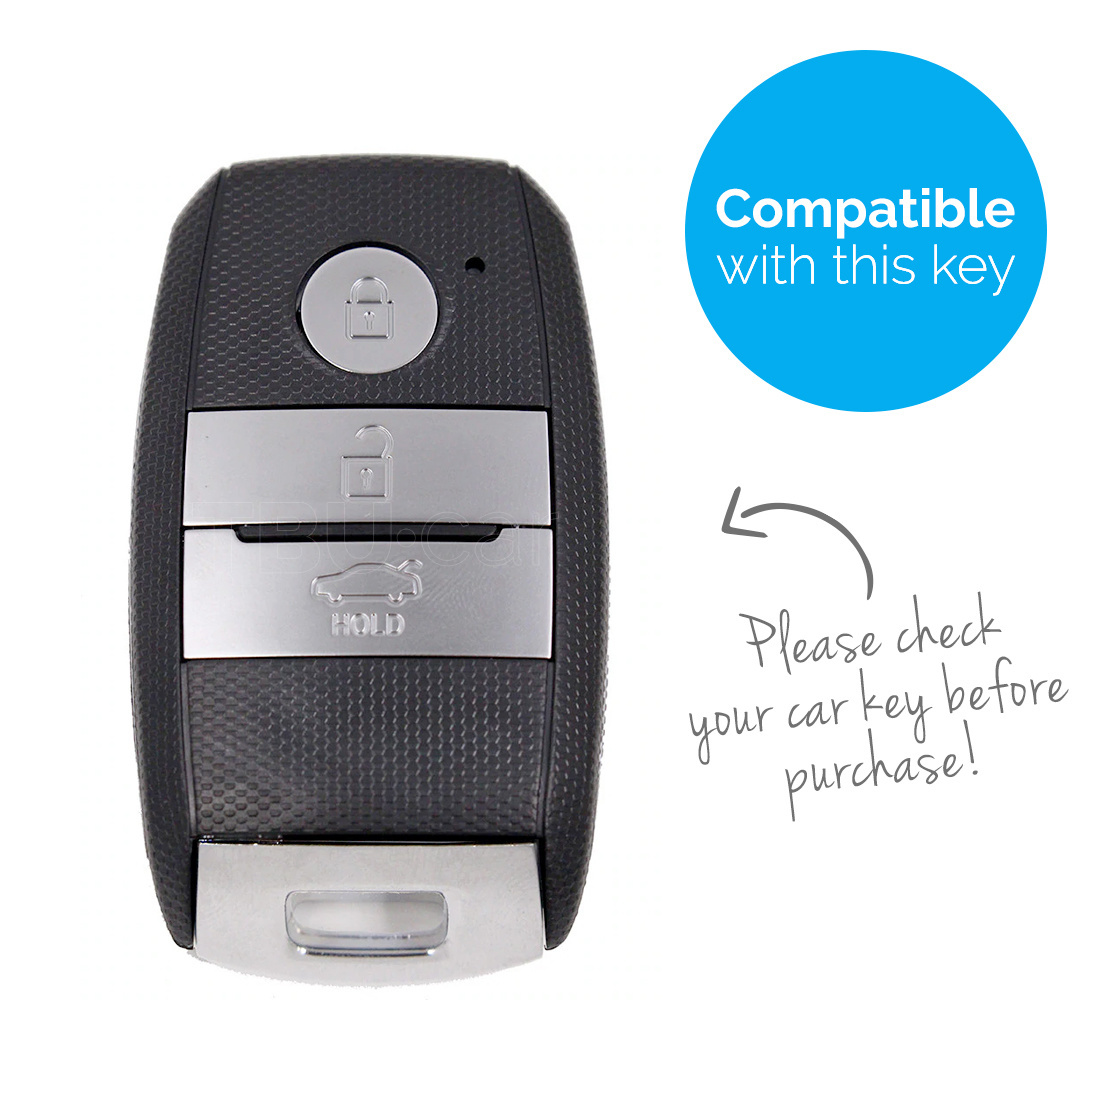 TBU car Autoschlüssel Hülle kompatibel mit Kia 3 Tasten (Keyless Entry) -  Schutzhülle aus Silikon - Auto Schlüsselhülle Cover in Schwarz